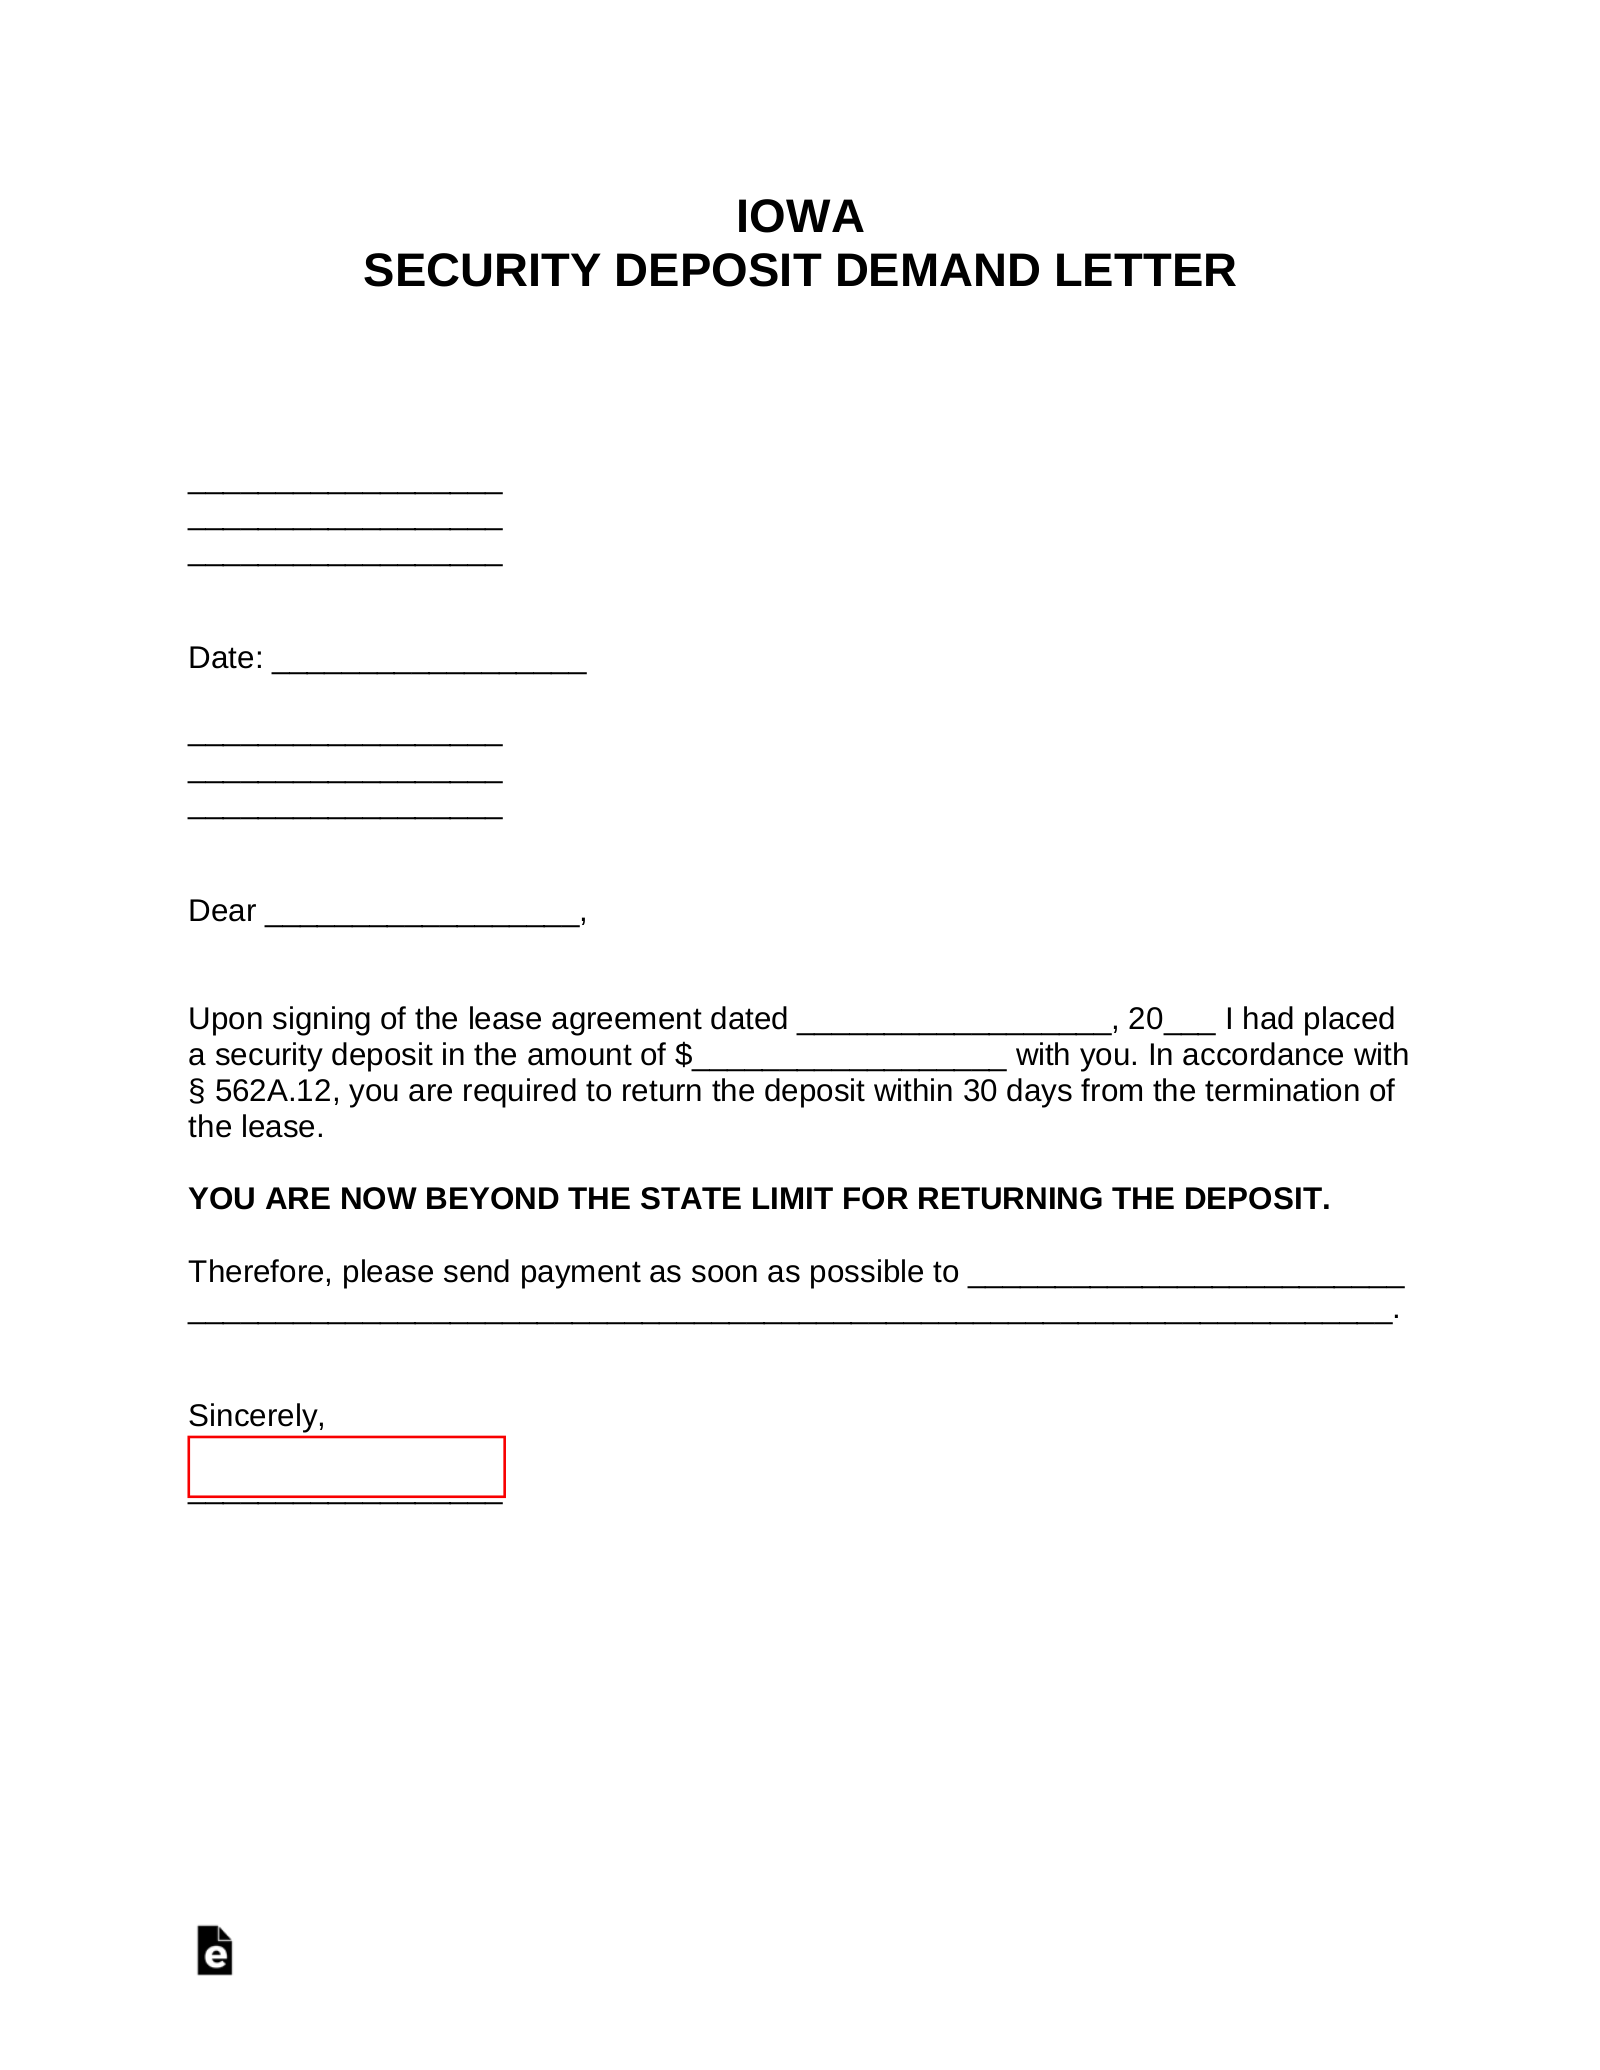 Iowa Security Deposit Demand Letter